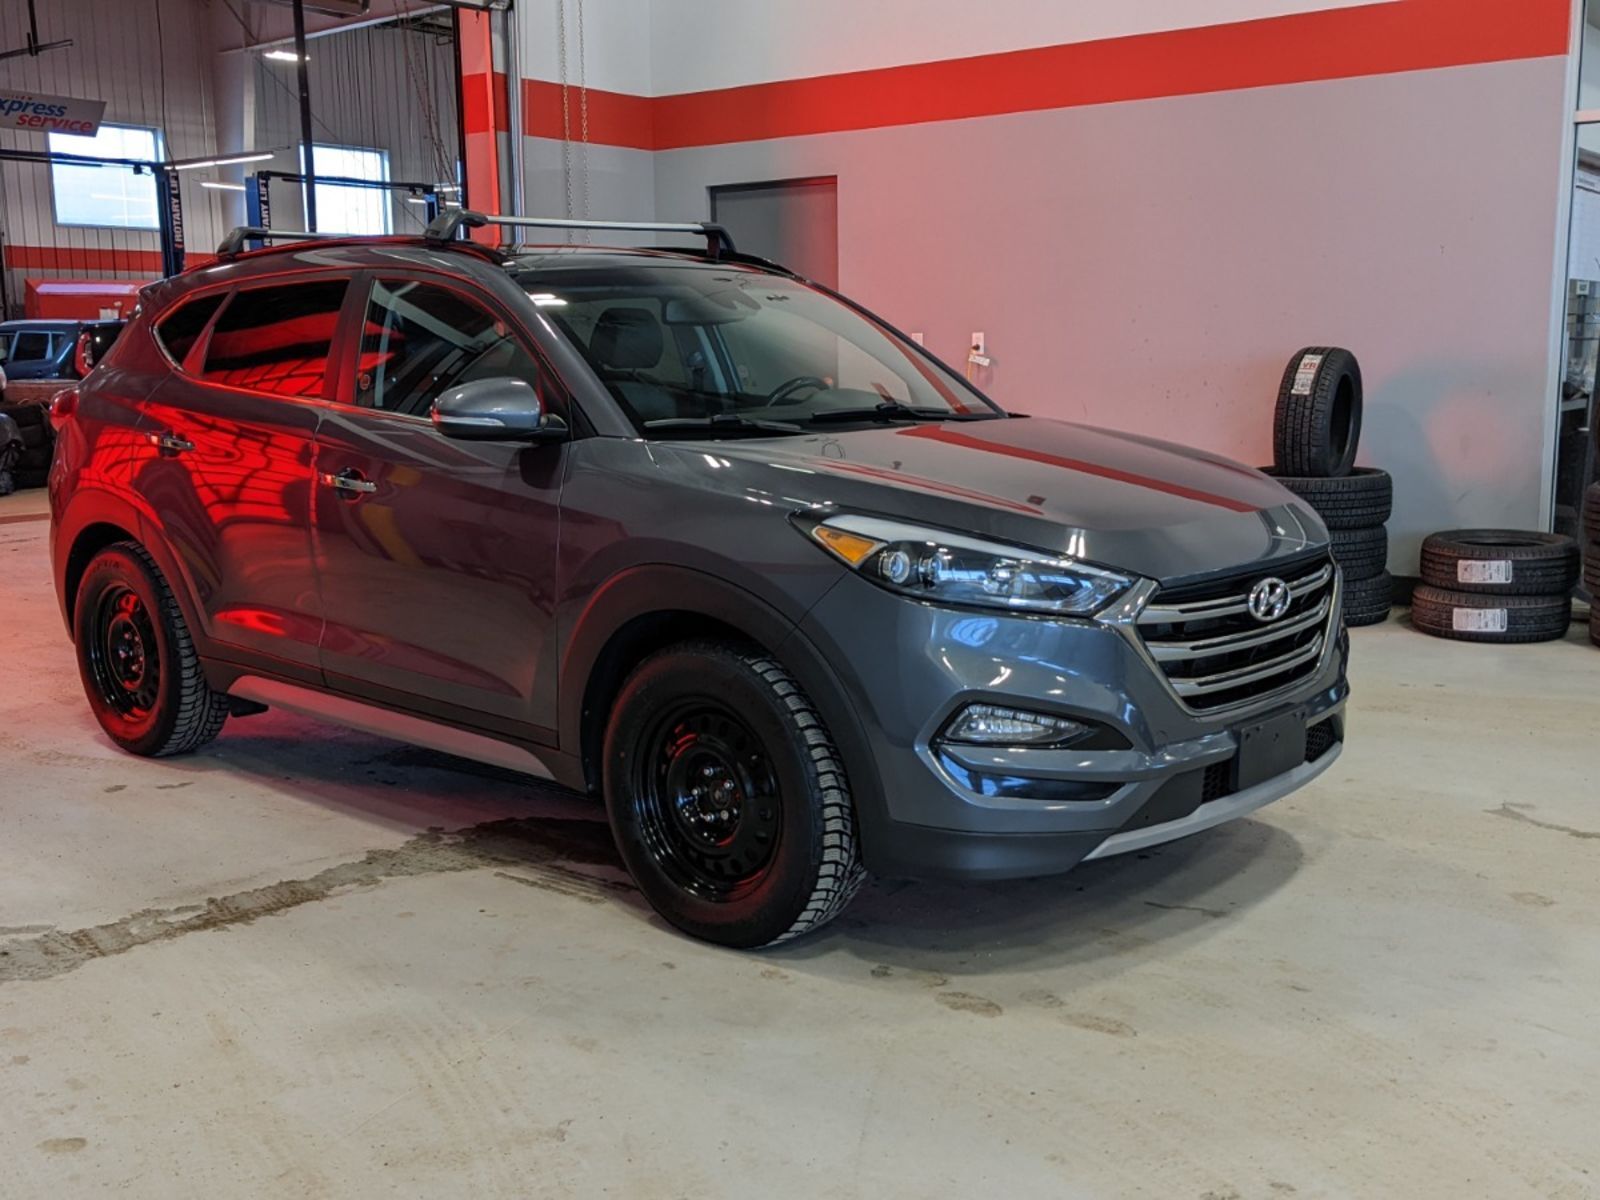 2018 Hyundai Tucson Ultimate - Leather, sunroof, navigation